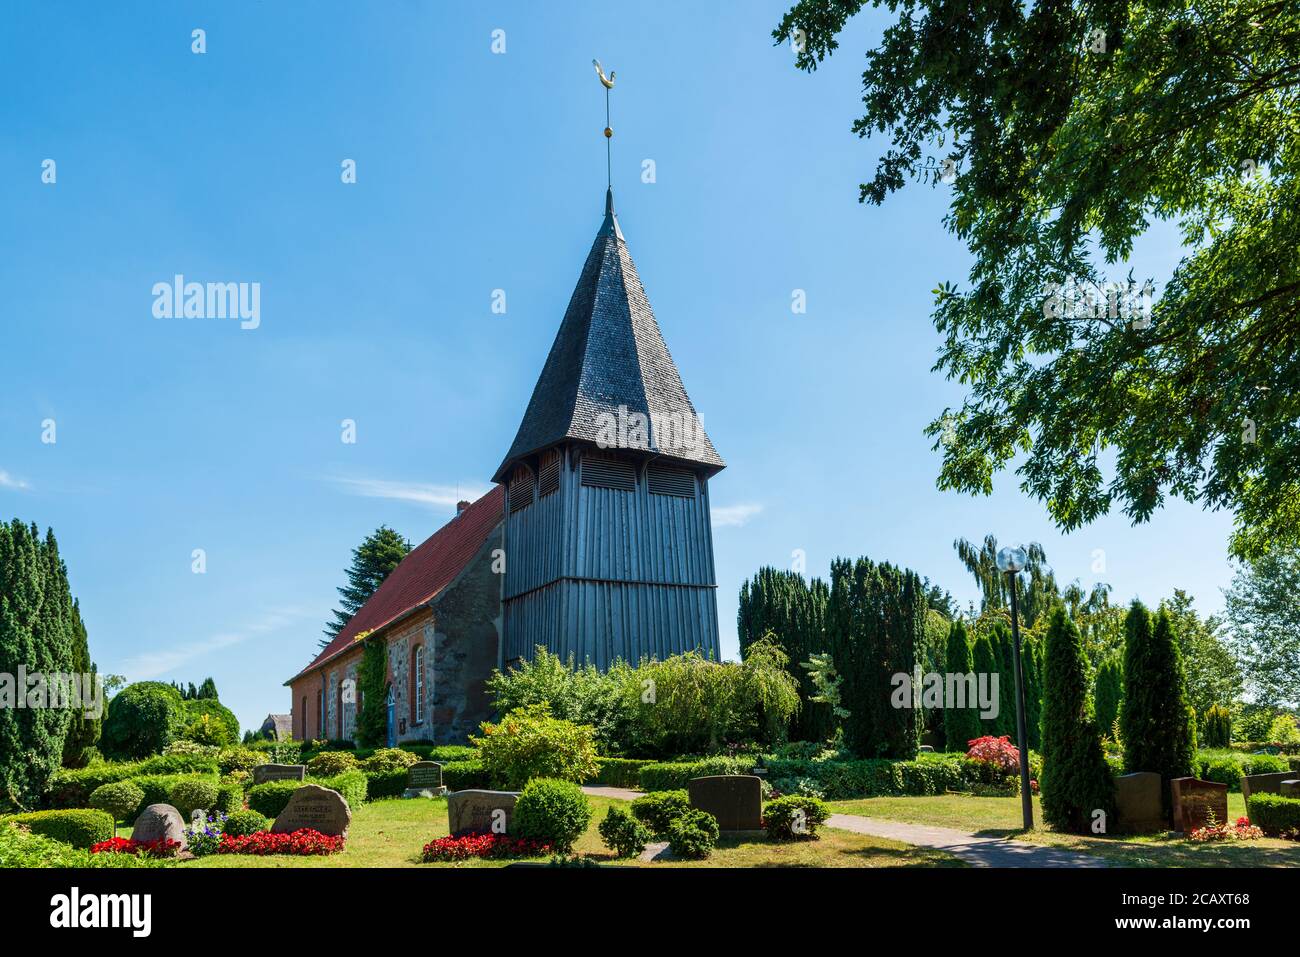 Romanische Kirche Peter & Paul aus dem 13. Jahrhundert dans Sehestedt Schleswig-Holstein am Nord-Ostsee-Kanal Banque D'Images